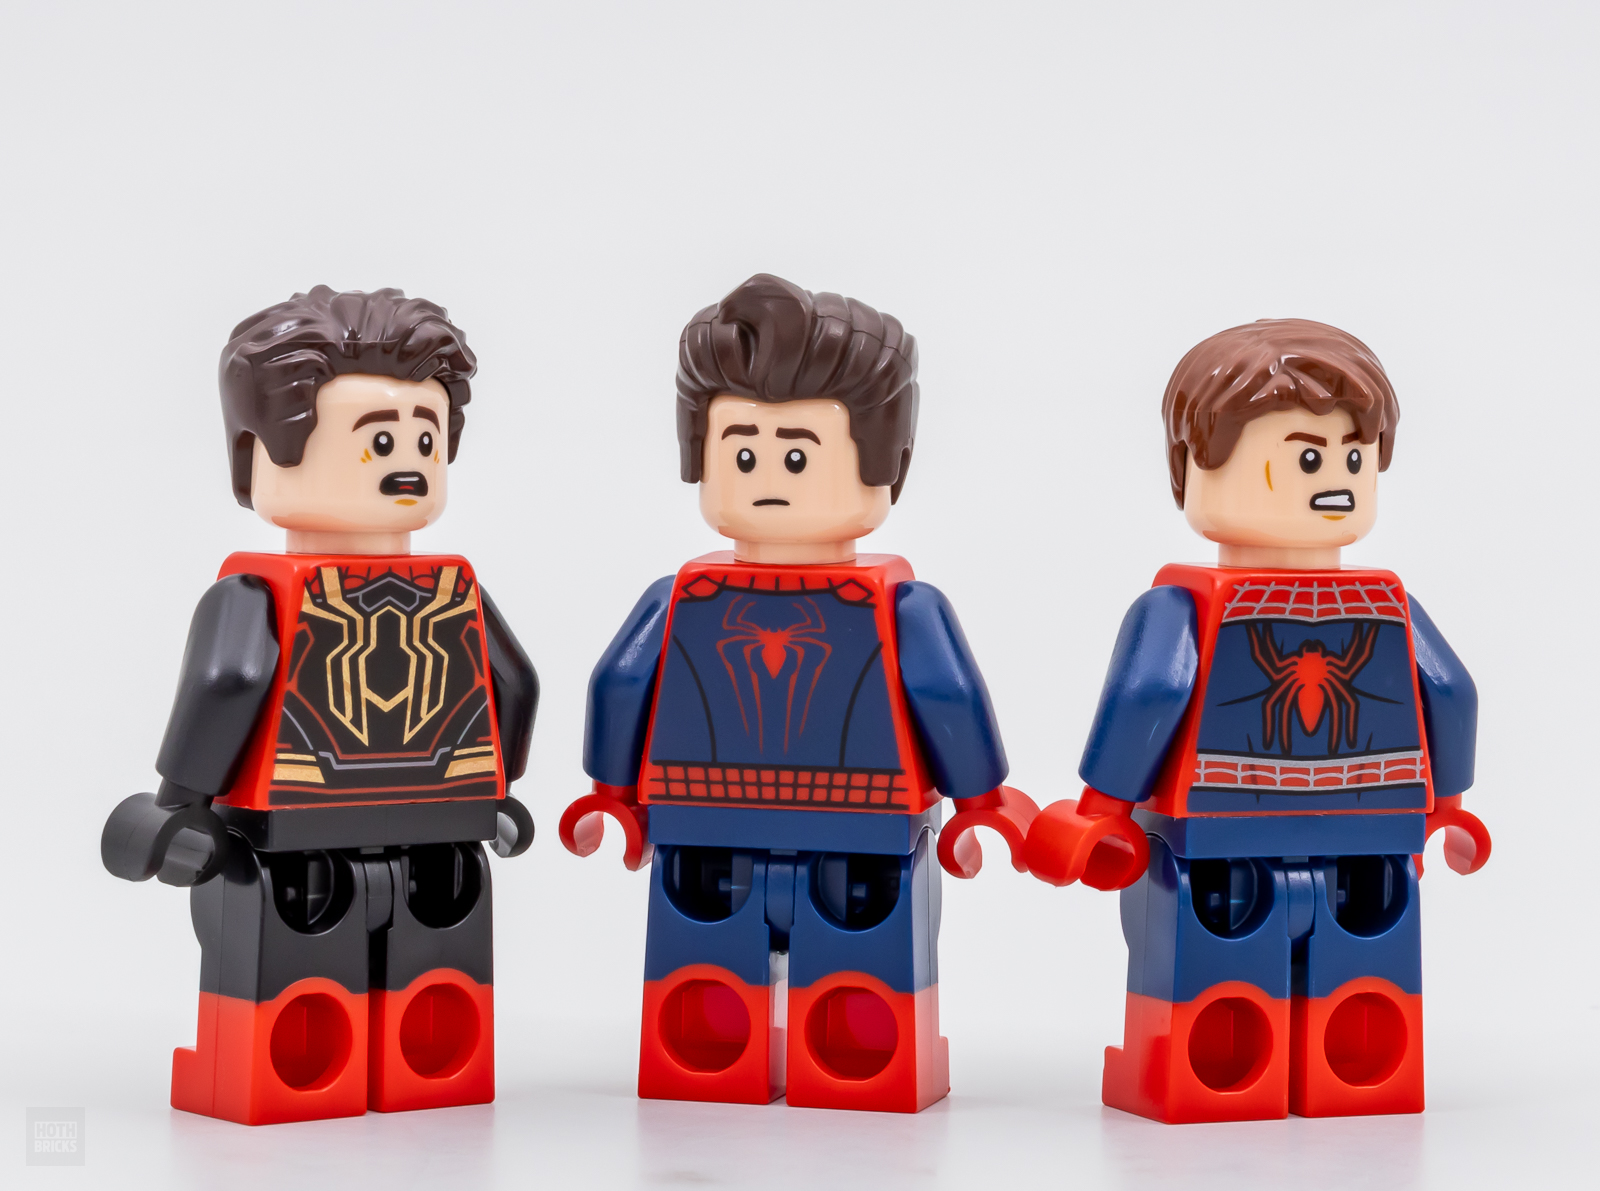 LEGO LEGO Marvel 76261 Le Combat Final de Spider-Man : No Way Home